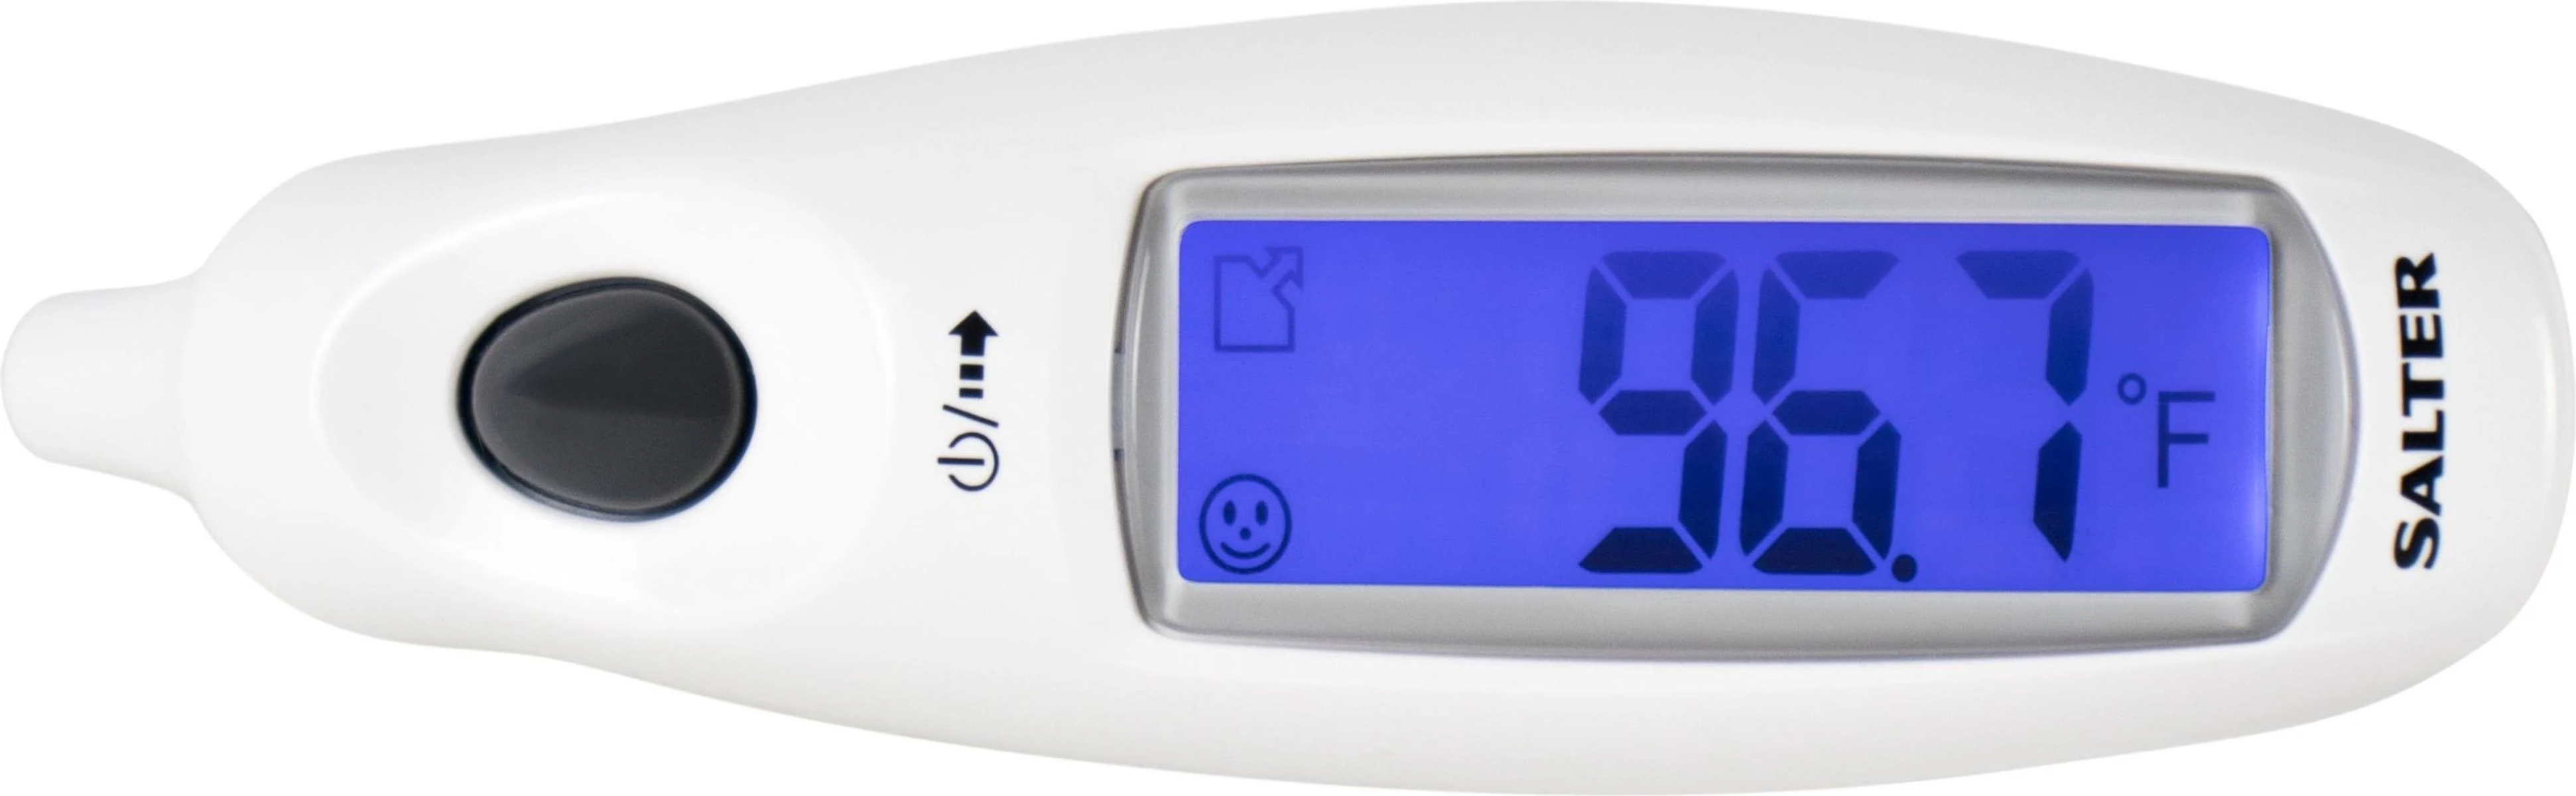 (Messart: SALTER Fieberthermometer kontaktlose TE-150-EU Infrarotmessung)